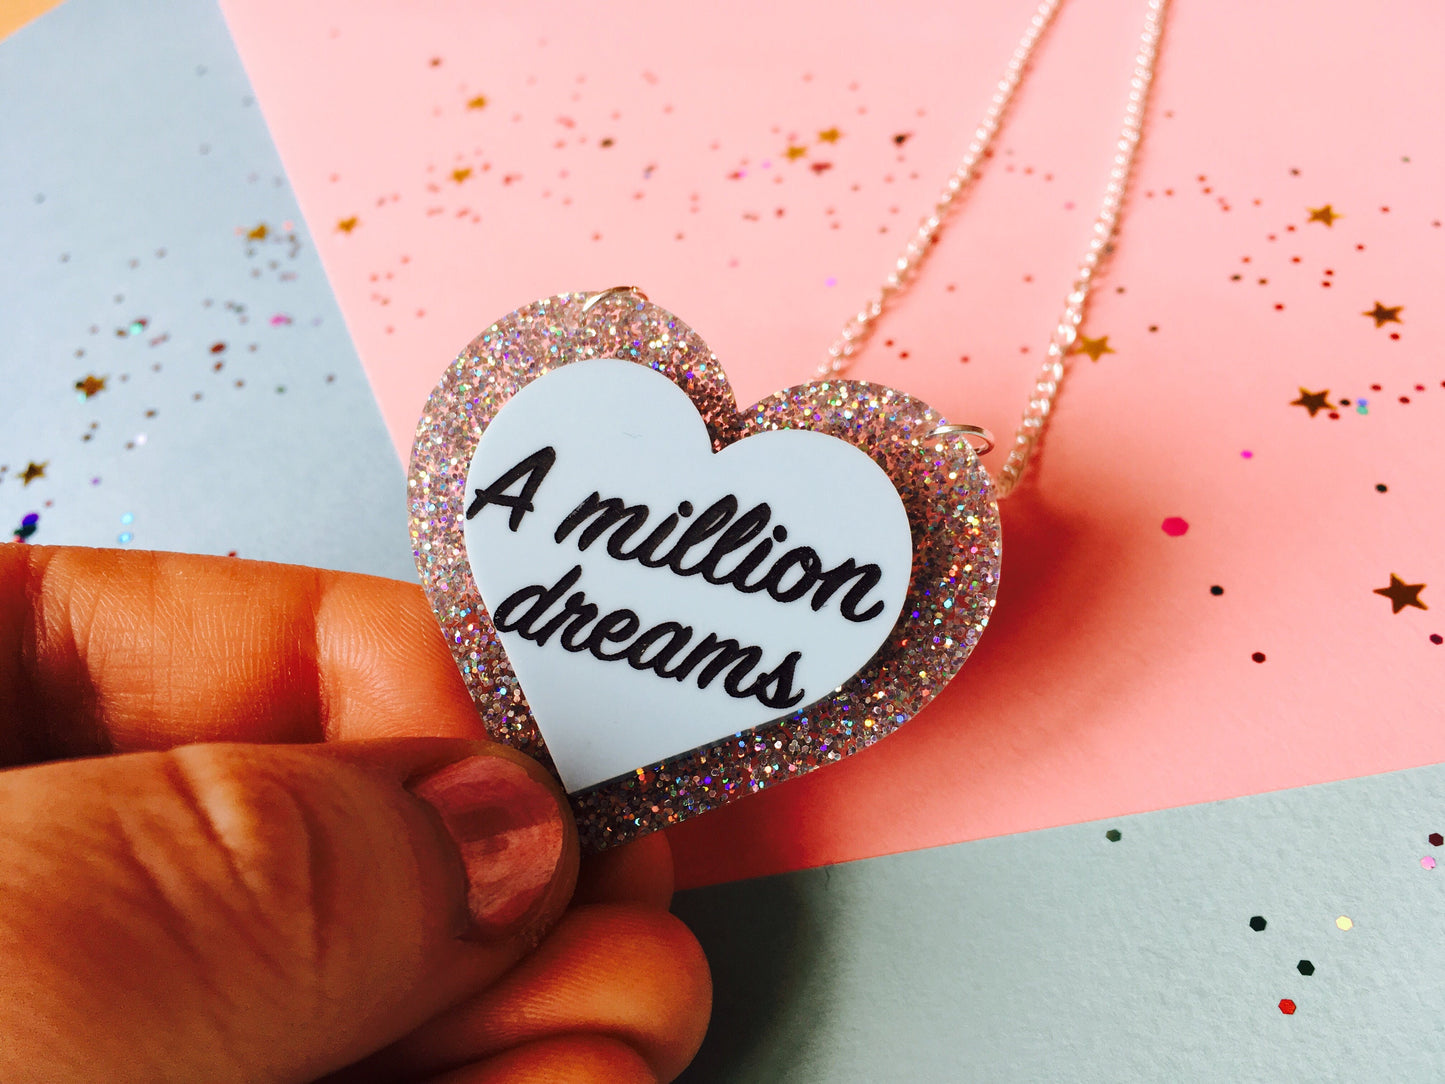 A Million Dreams Necklace, Inspirational Jewellery